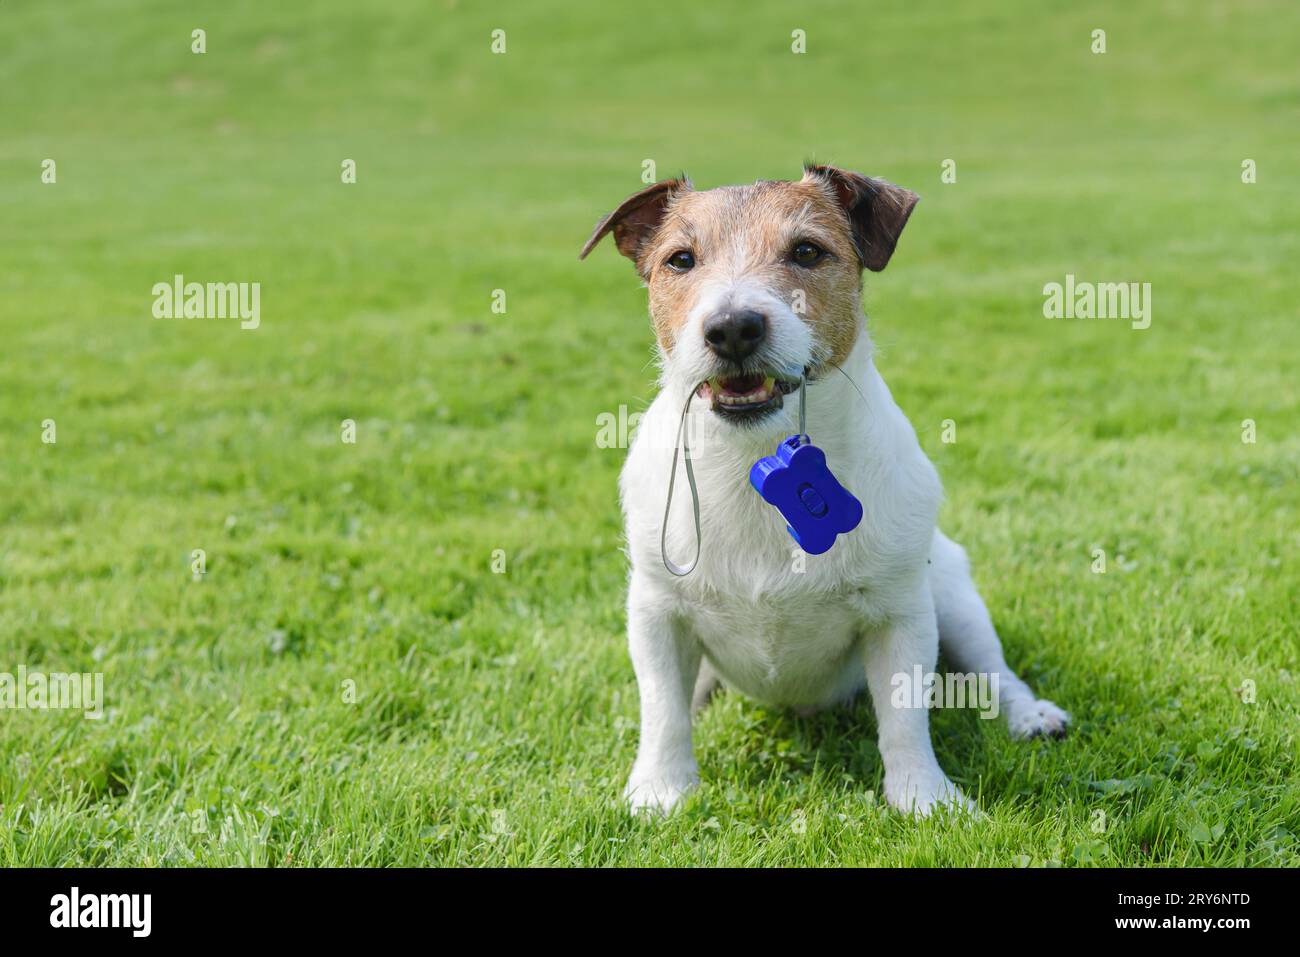 Konzept des stressfreien Hundetrainings mit Clicker und positiver Verstärkung Stockfoto